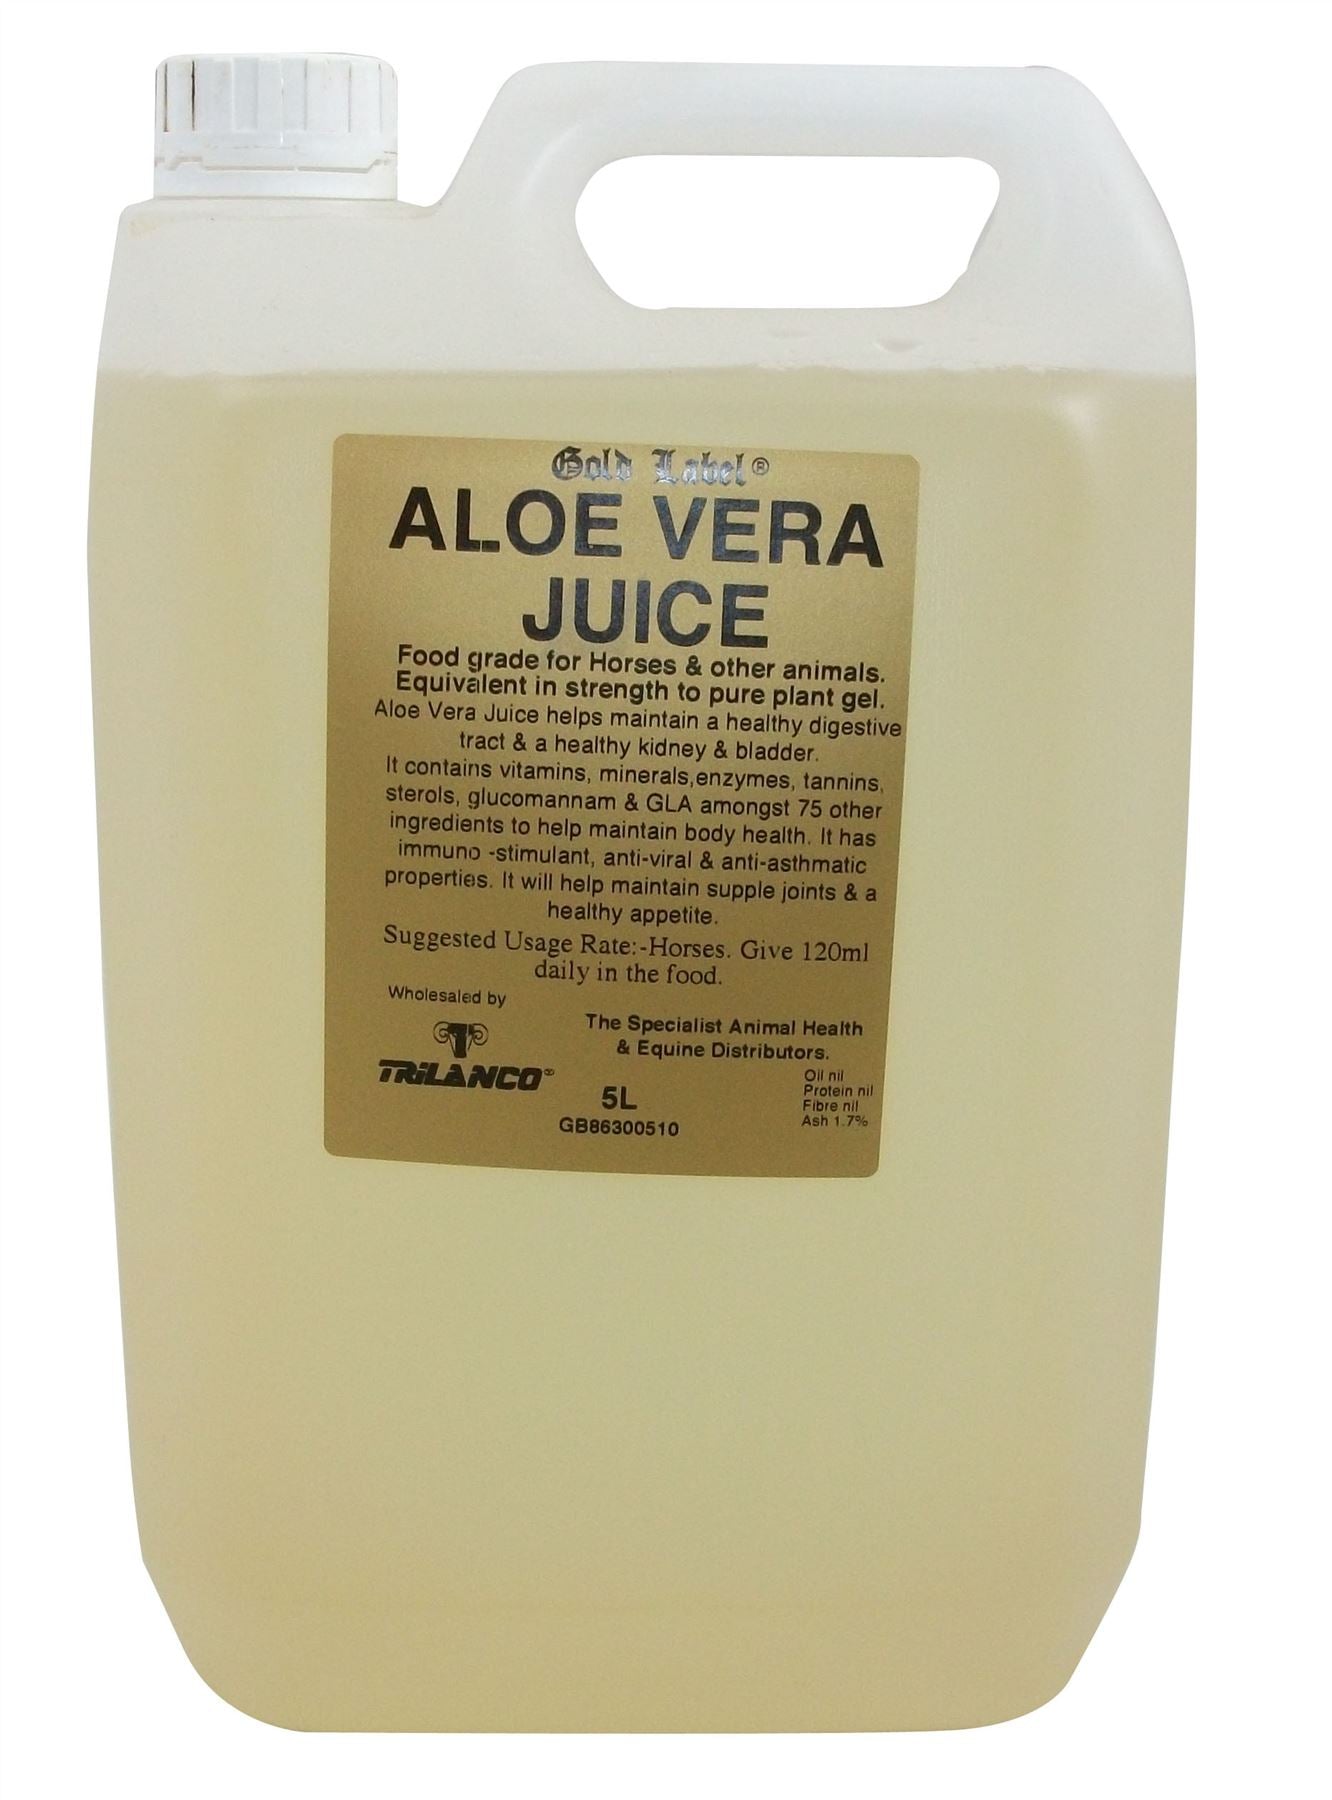 Gold Label Aloe Vera Juice - Just Horse Riders